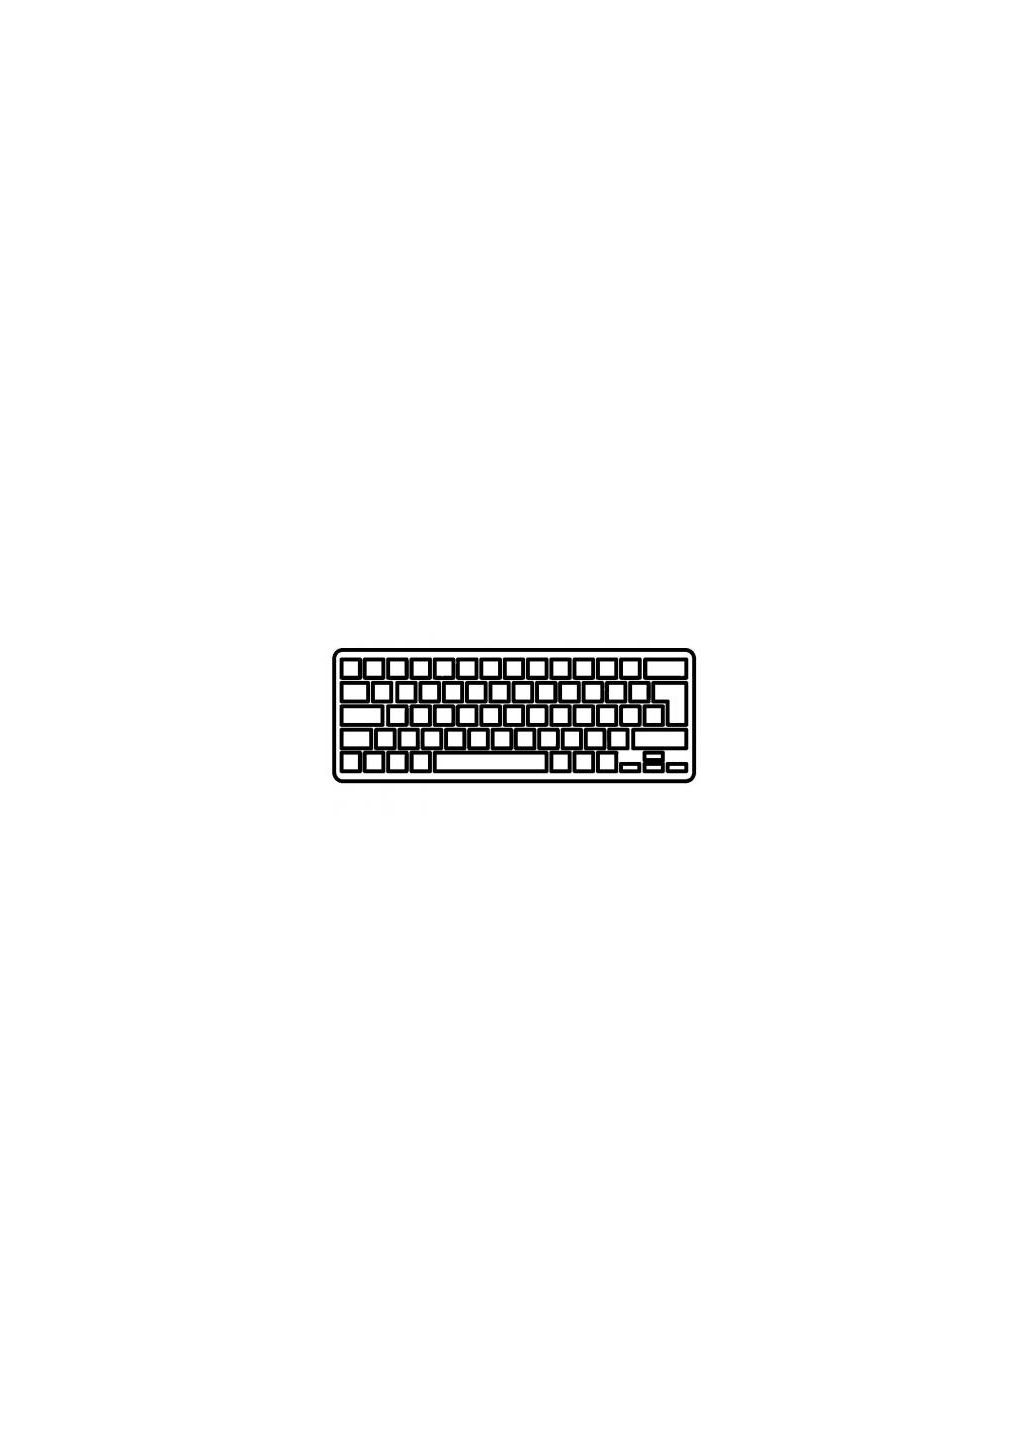 Клавиатура ноутбука Macbook Pro 15.4" A1286 (2008 года) черн. без рамки RU/US (A43537) Apple macbook pro 15.4" a1286 (2008 года) черн.без рамки (276707503)